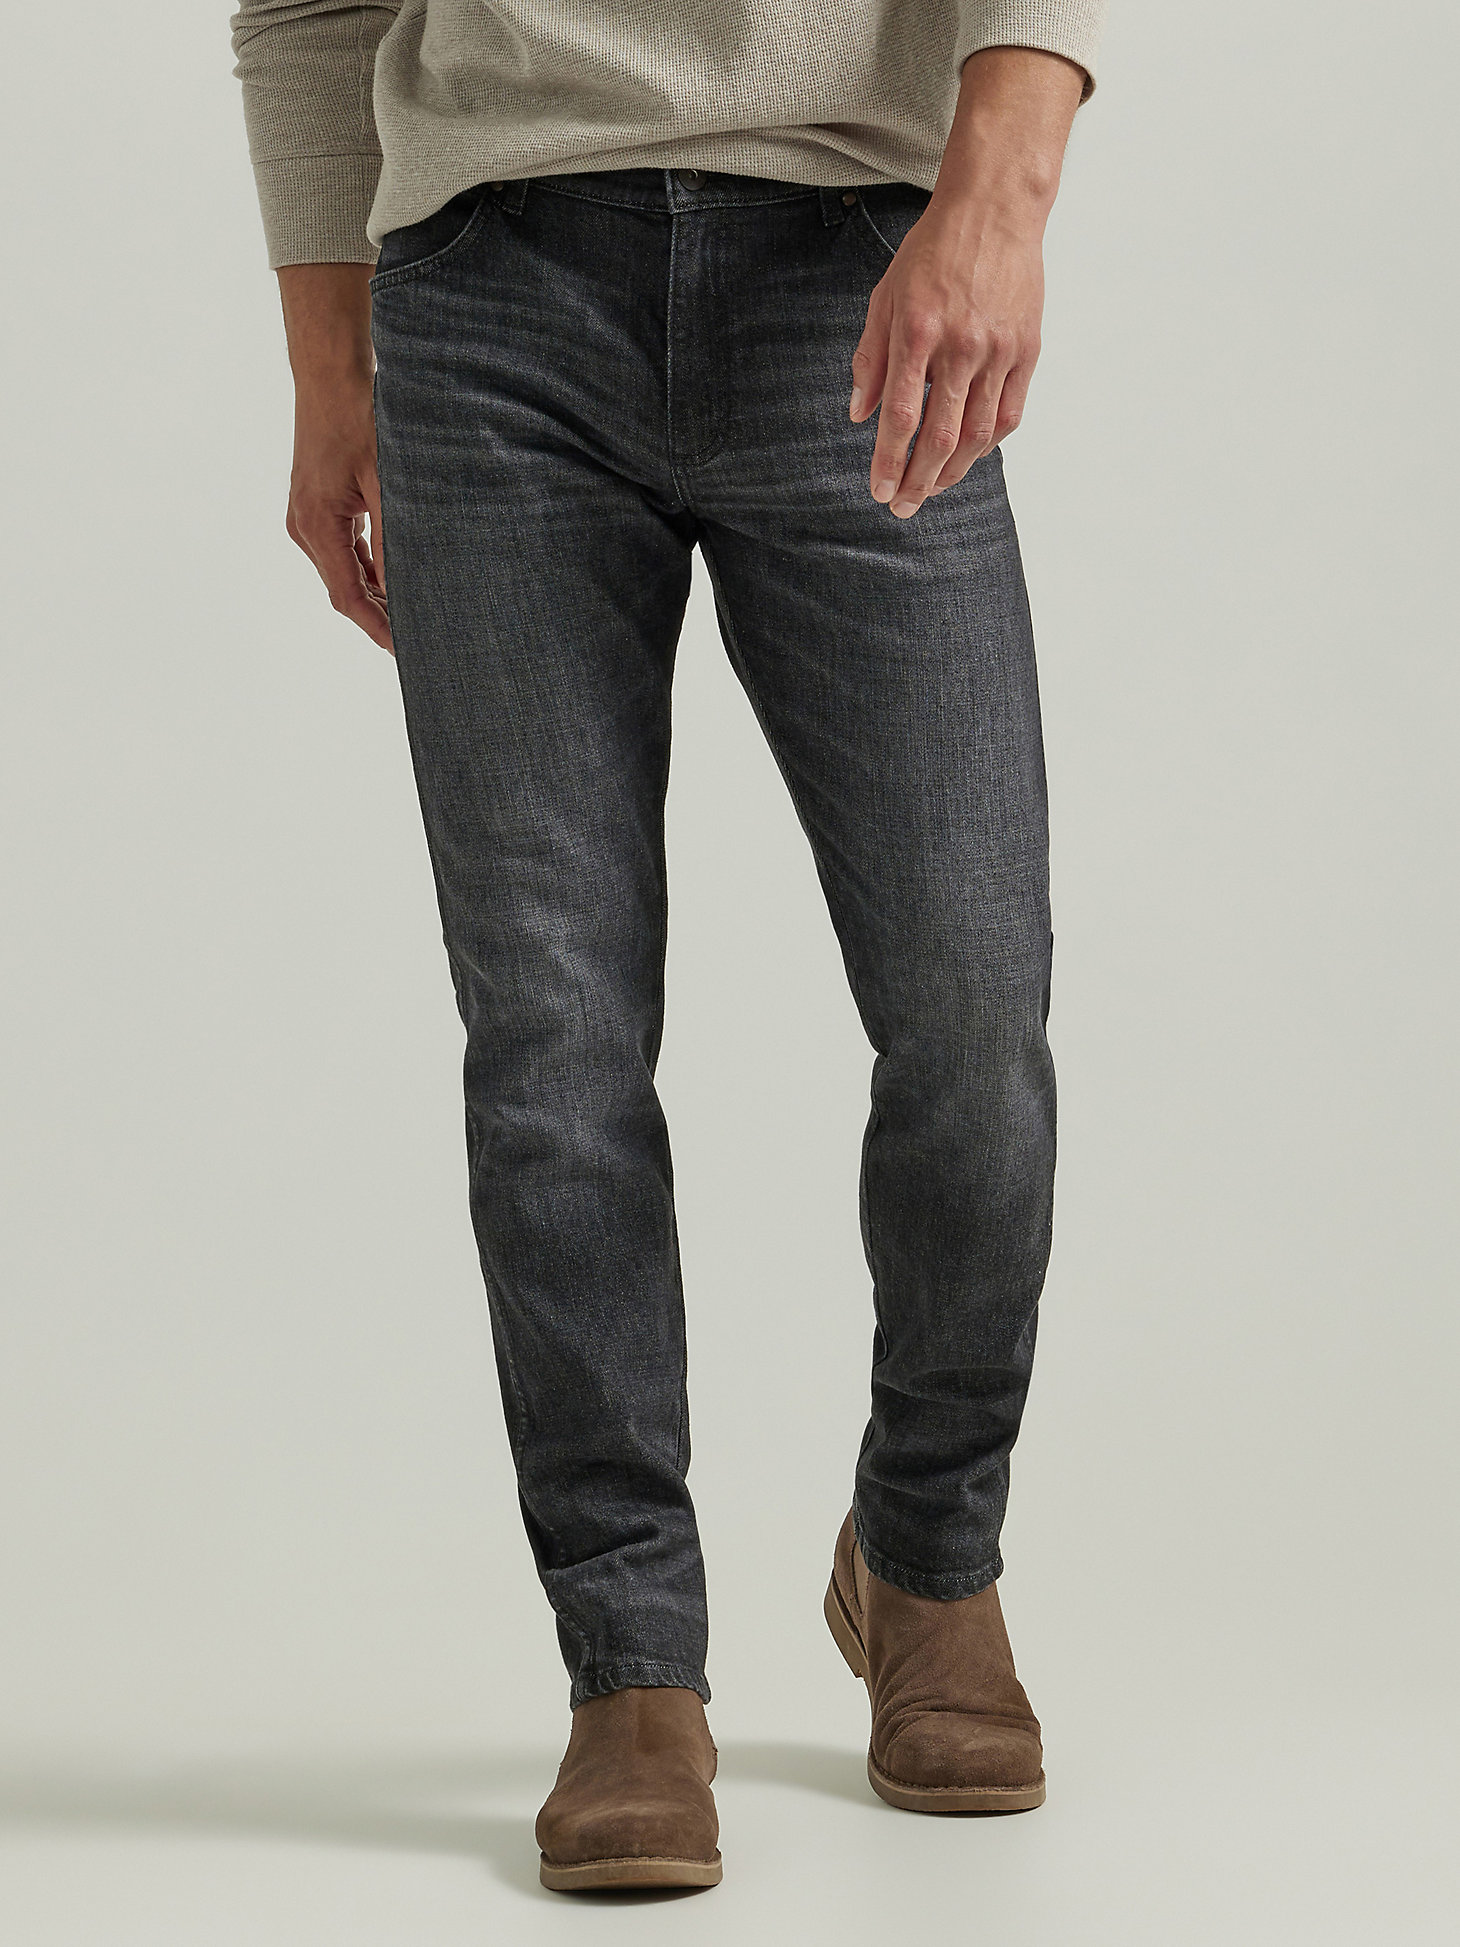 Men's Tapered Regular Fit Jean in Grey Wash alternative view 4